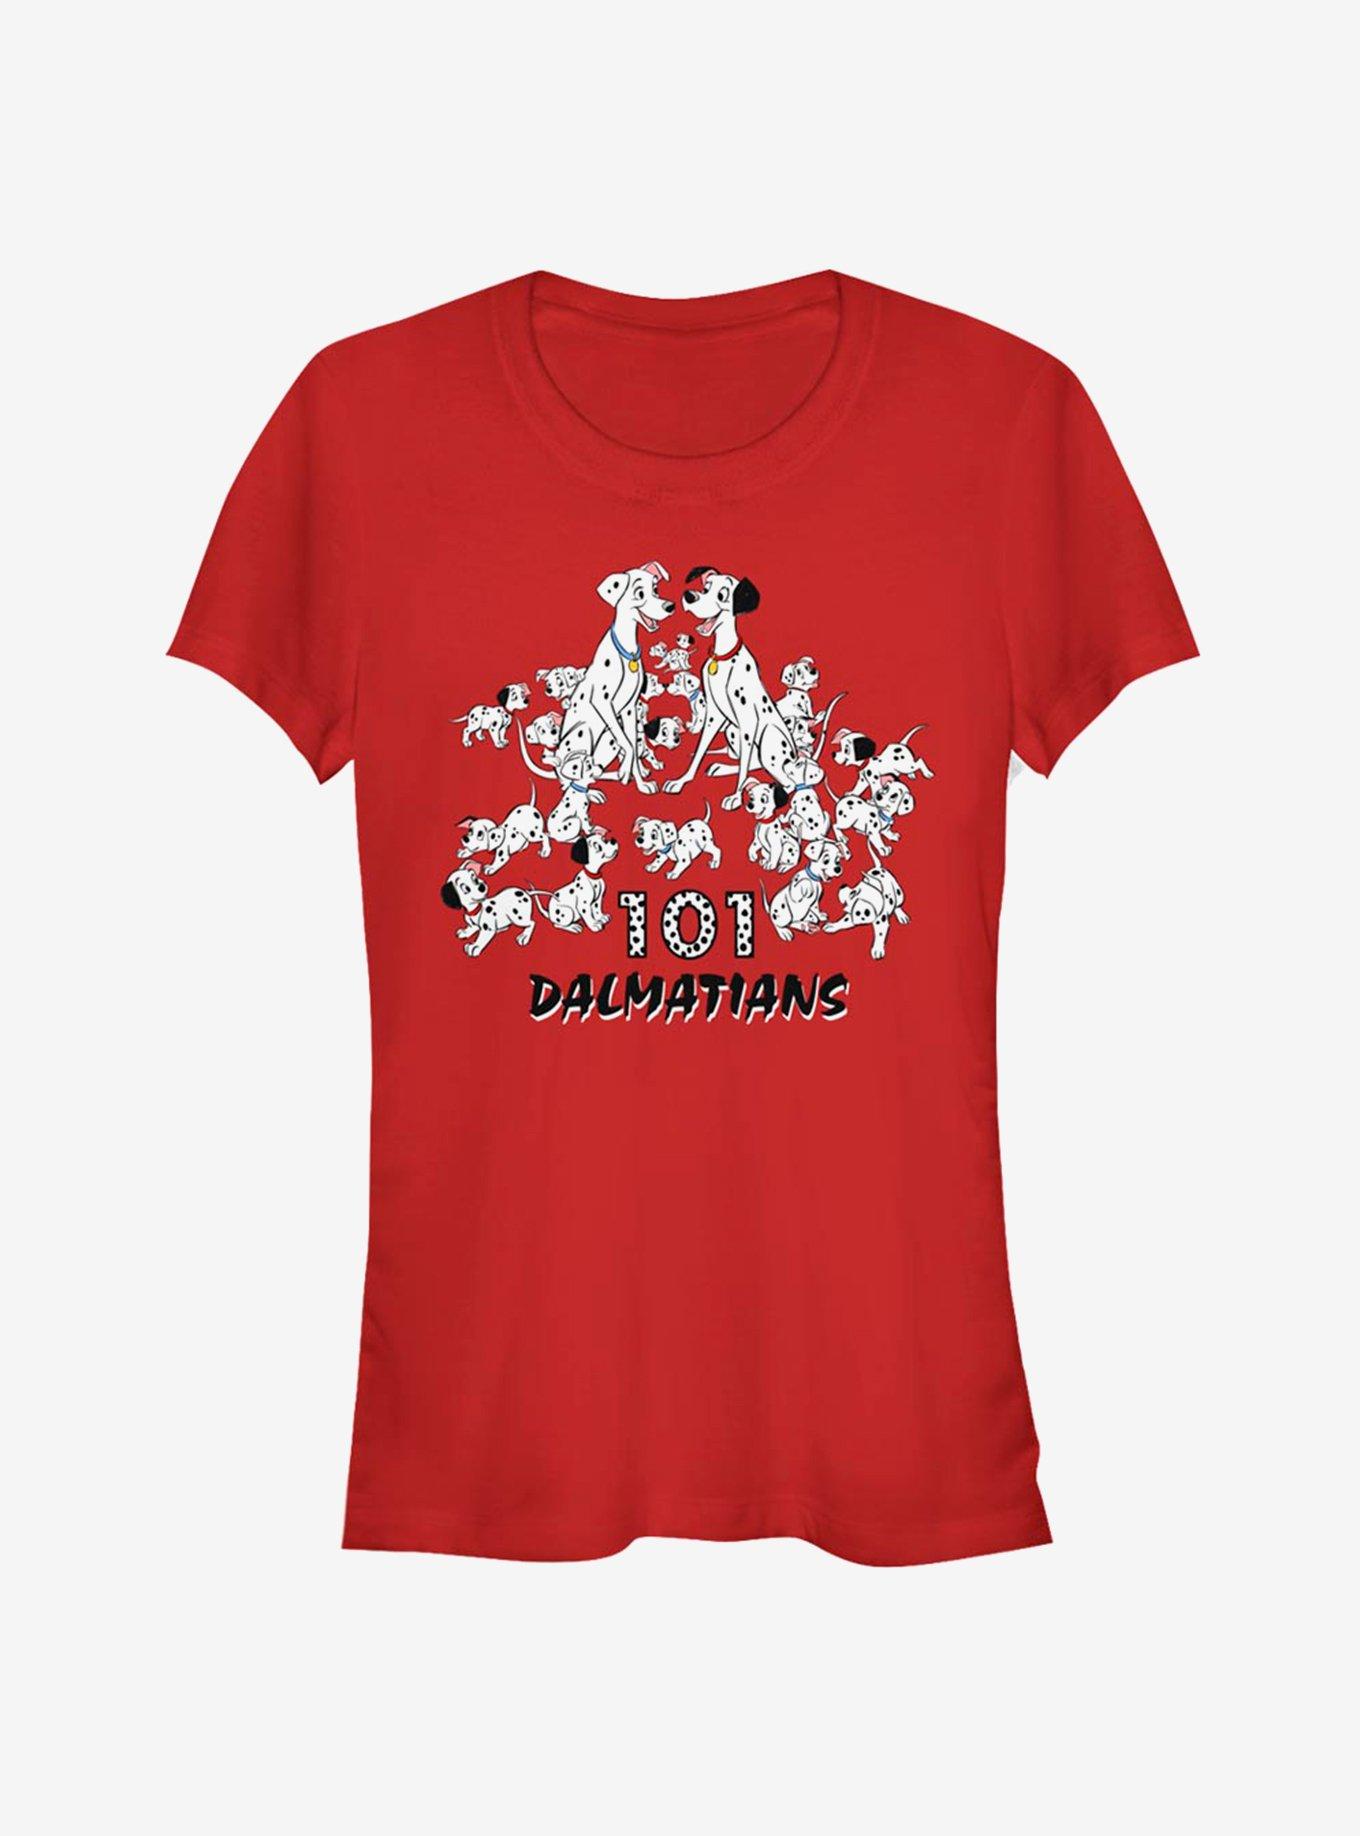 Disney 101 Dalmatians The Whole Gang Classic Girls T-Shirt, RED, hi-res